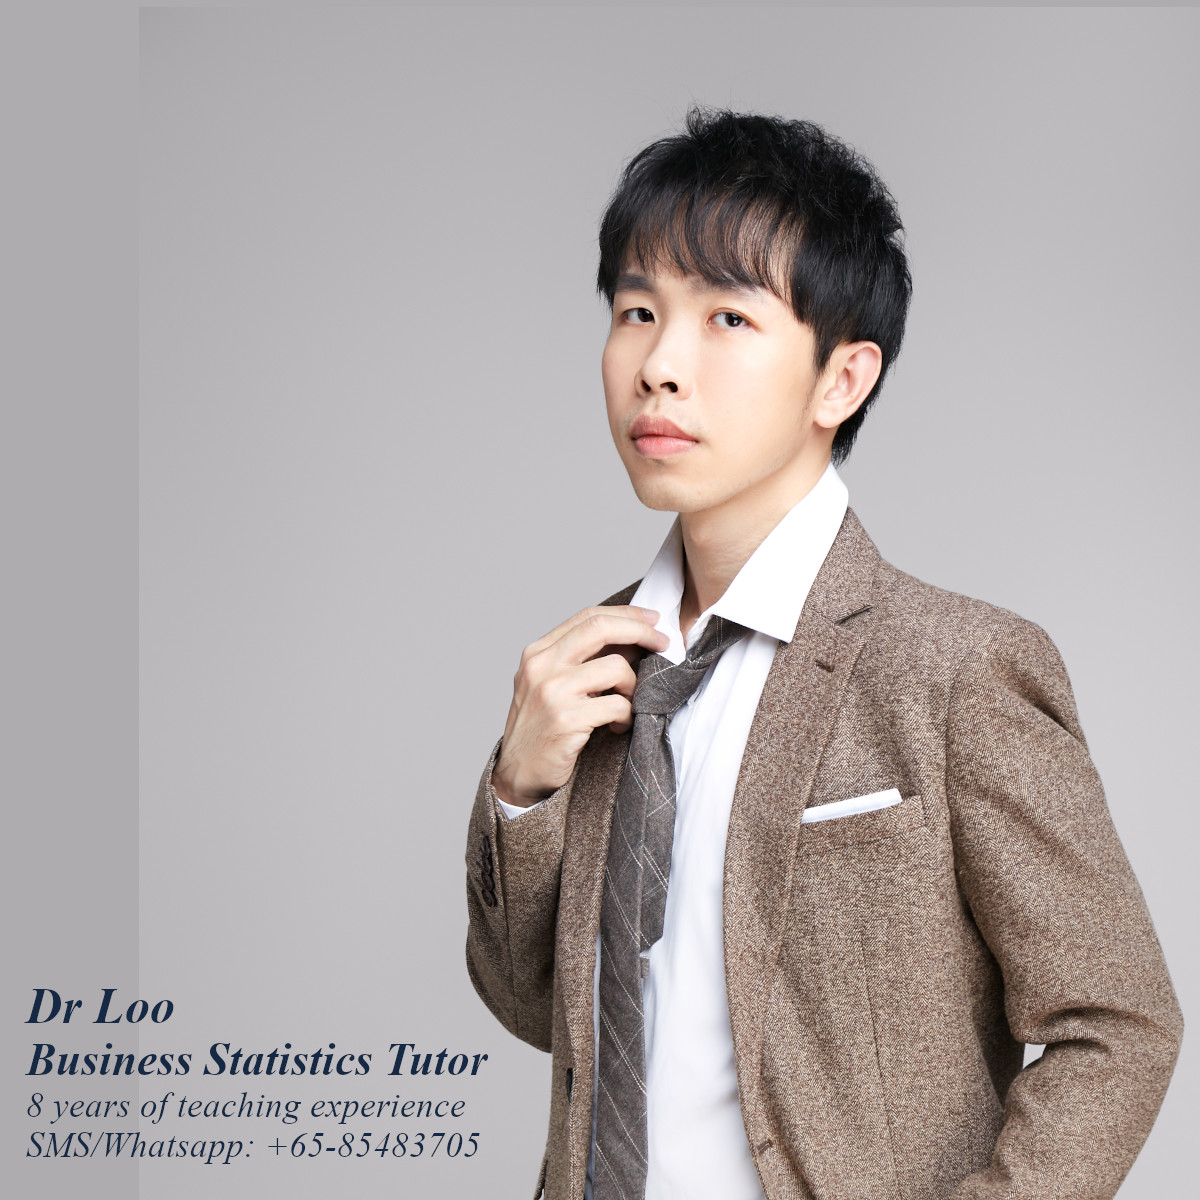 Business Statistics Tutor in Singapore